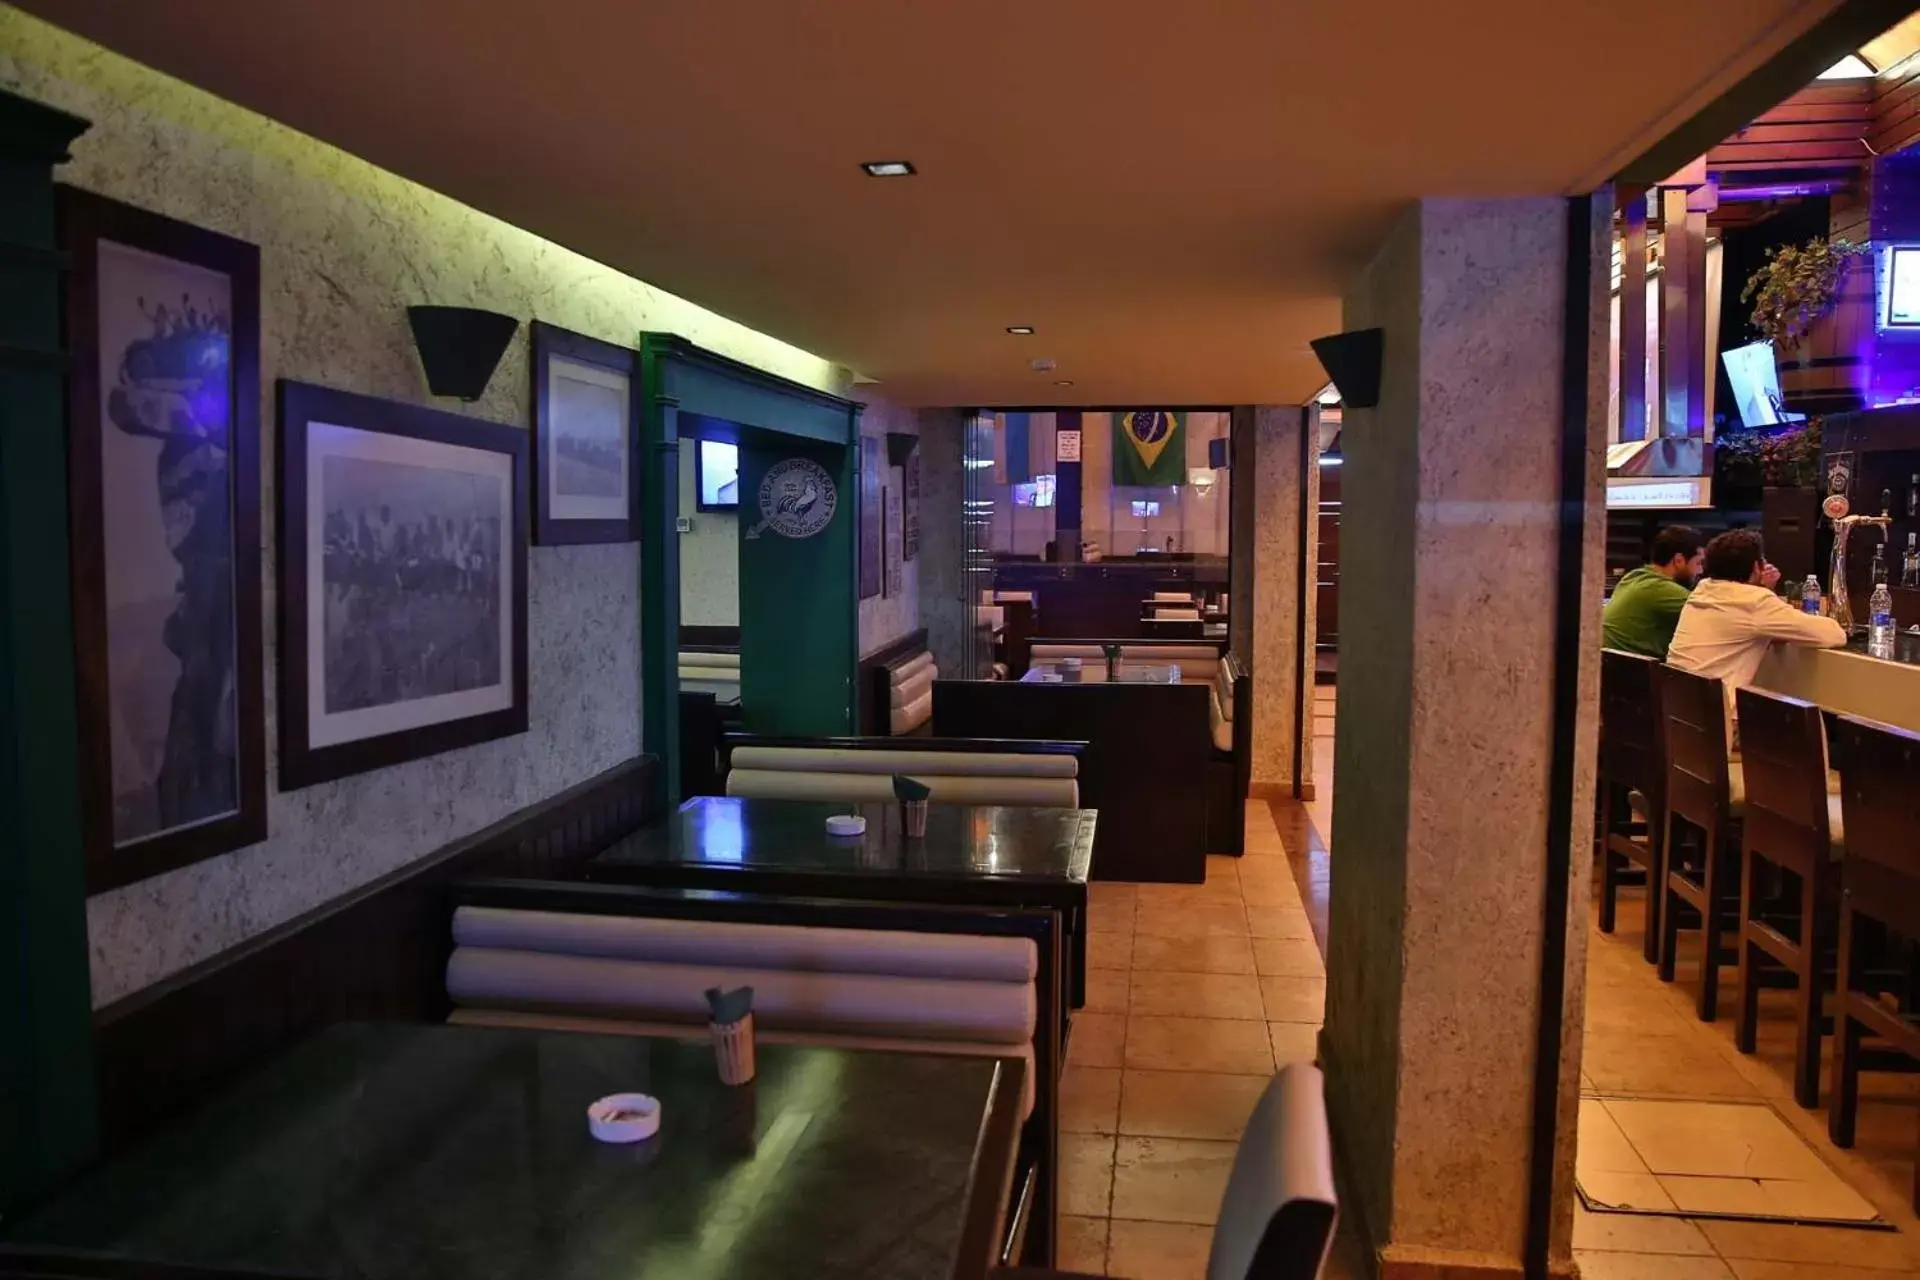 Restaurant/places to eat in Hisham Hotel